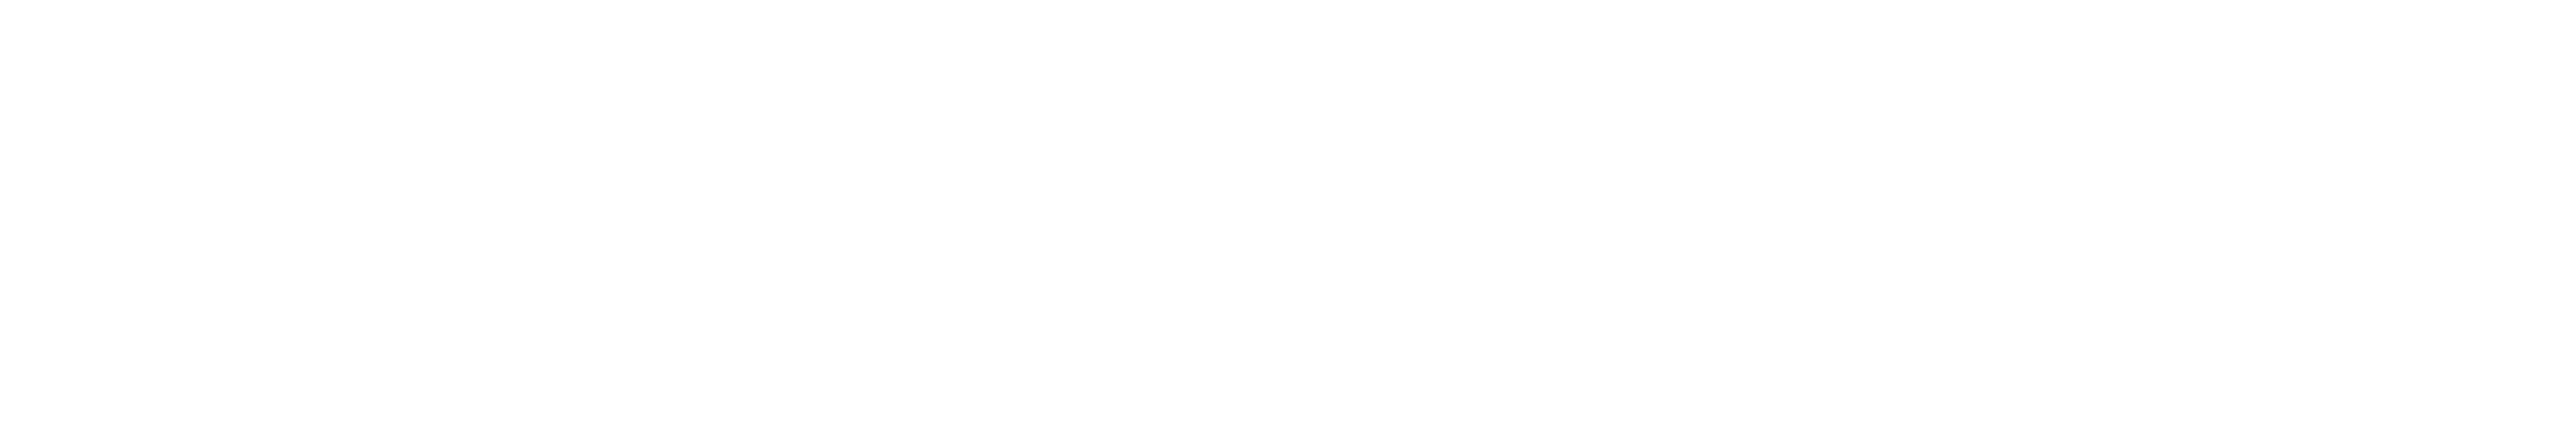 Logotipo_Posgrados-bco